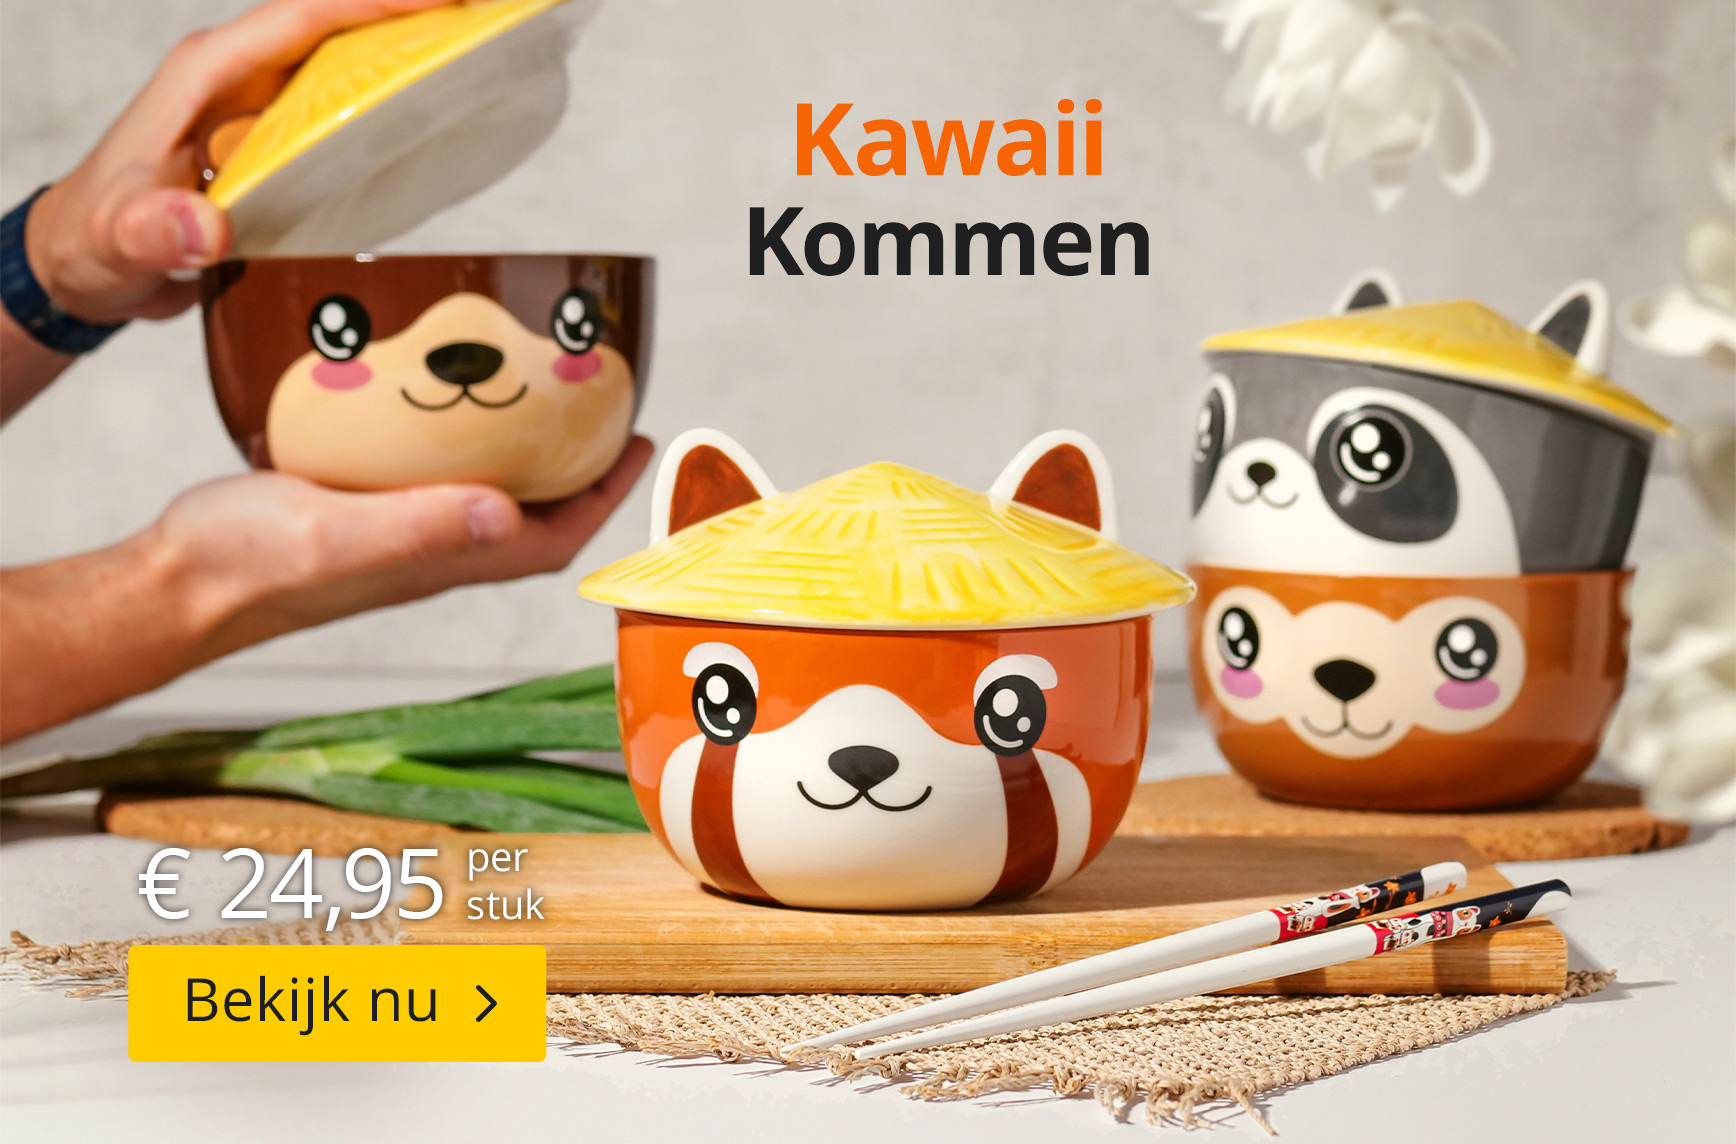 Kawaii Kommen - €24,95 per stuk